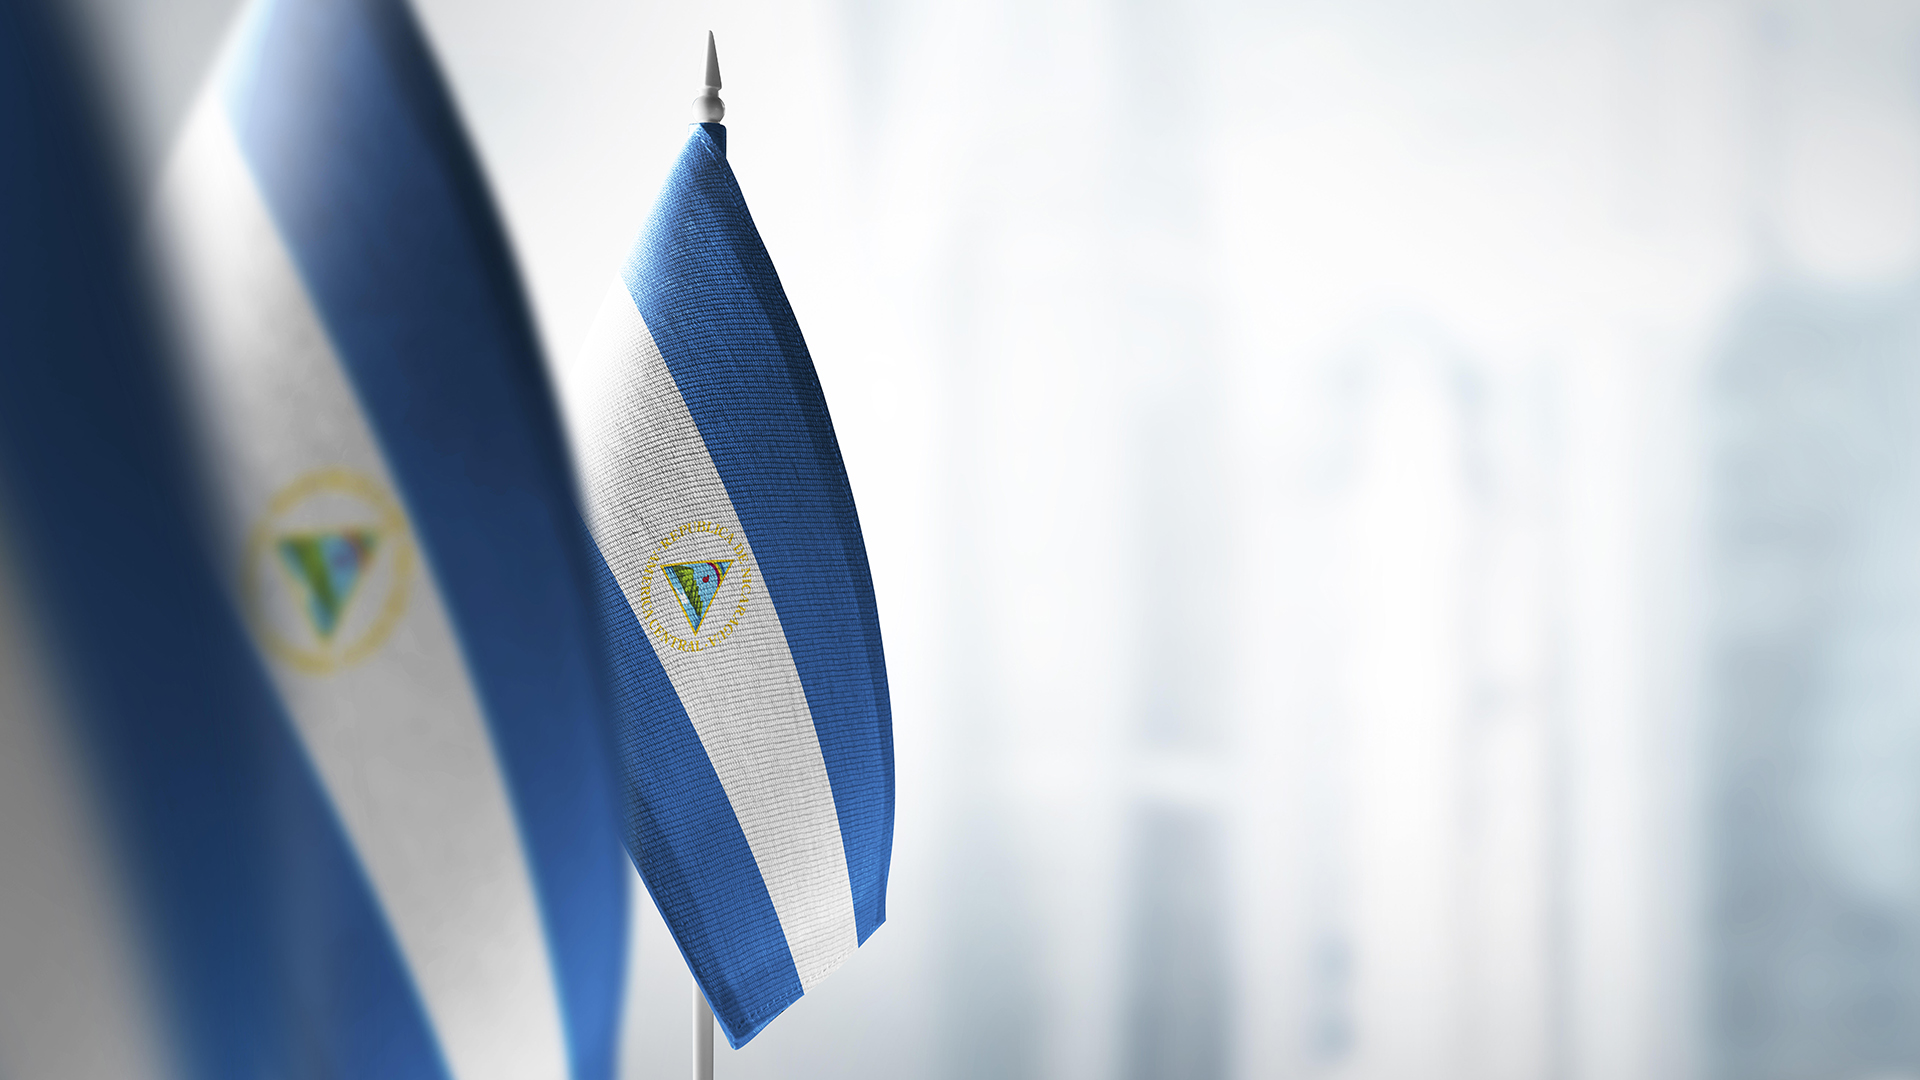 Flaggen von Nicaragua | picture alliance / Zoonar